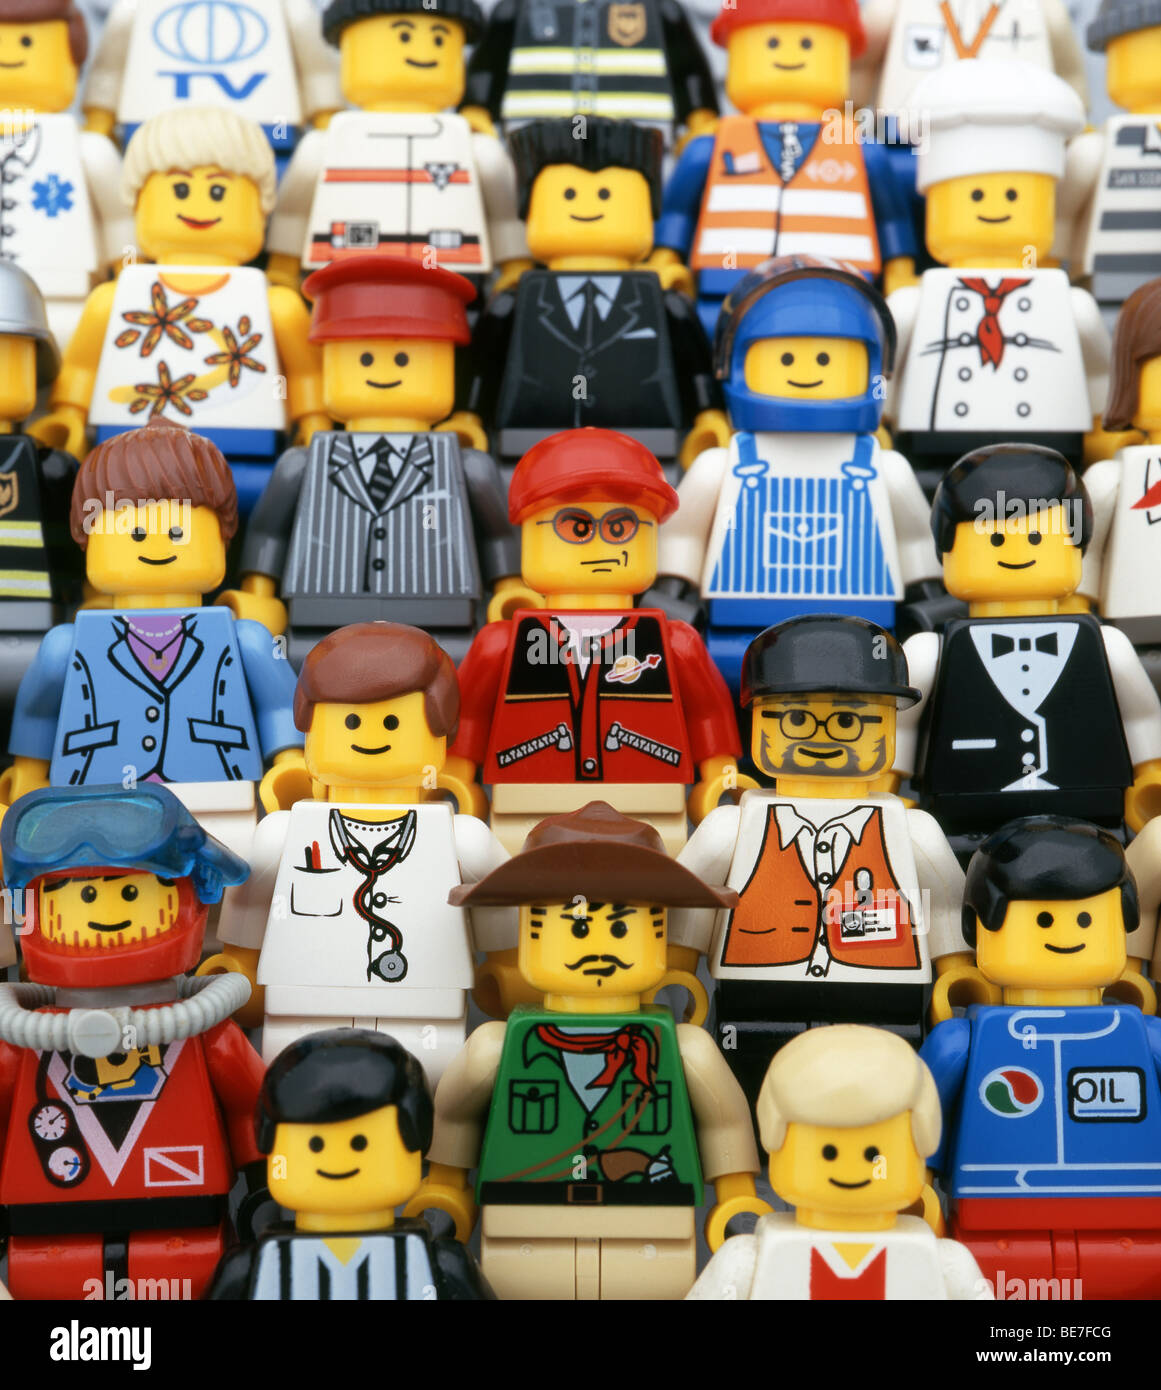 Lego Minifigures Stock Photo - Alamy